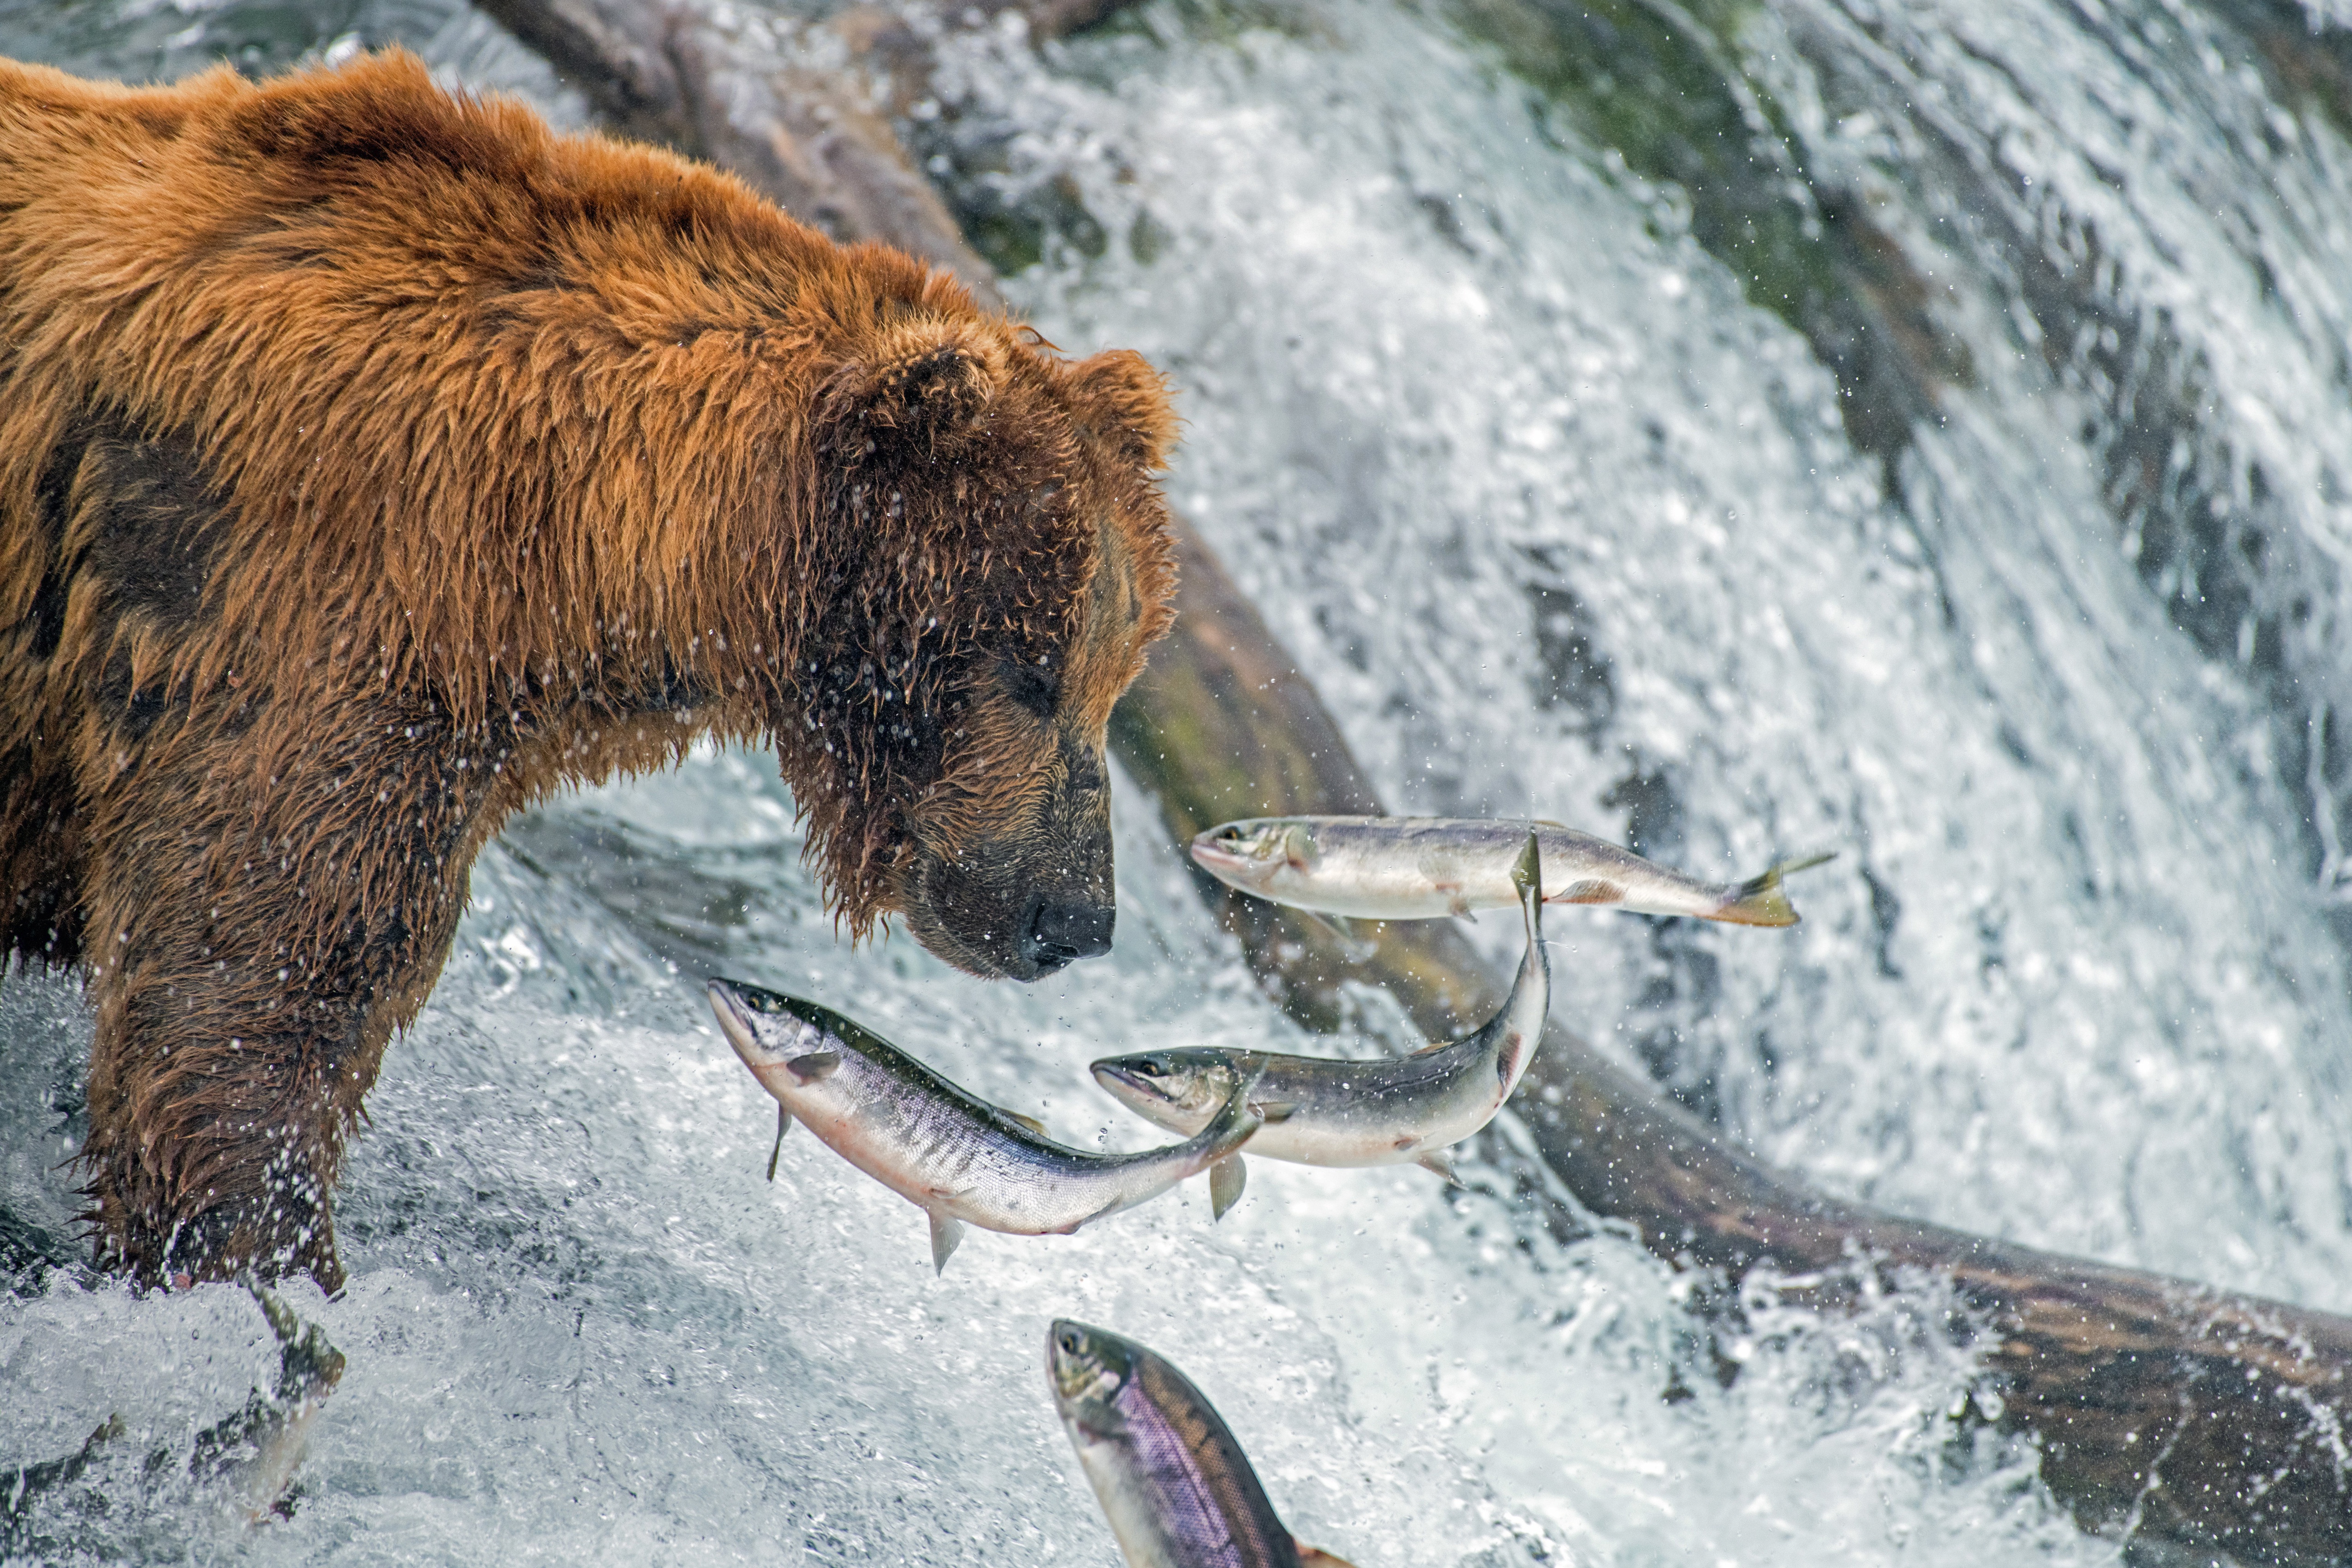 505356 descargar imagen animales, grizzly, oso pardo, osos: fondos de pantalla y protectores de pantalla gratis